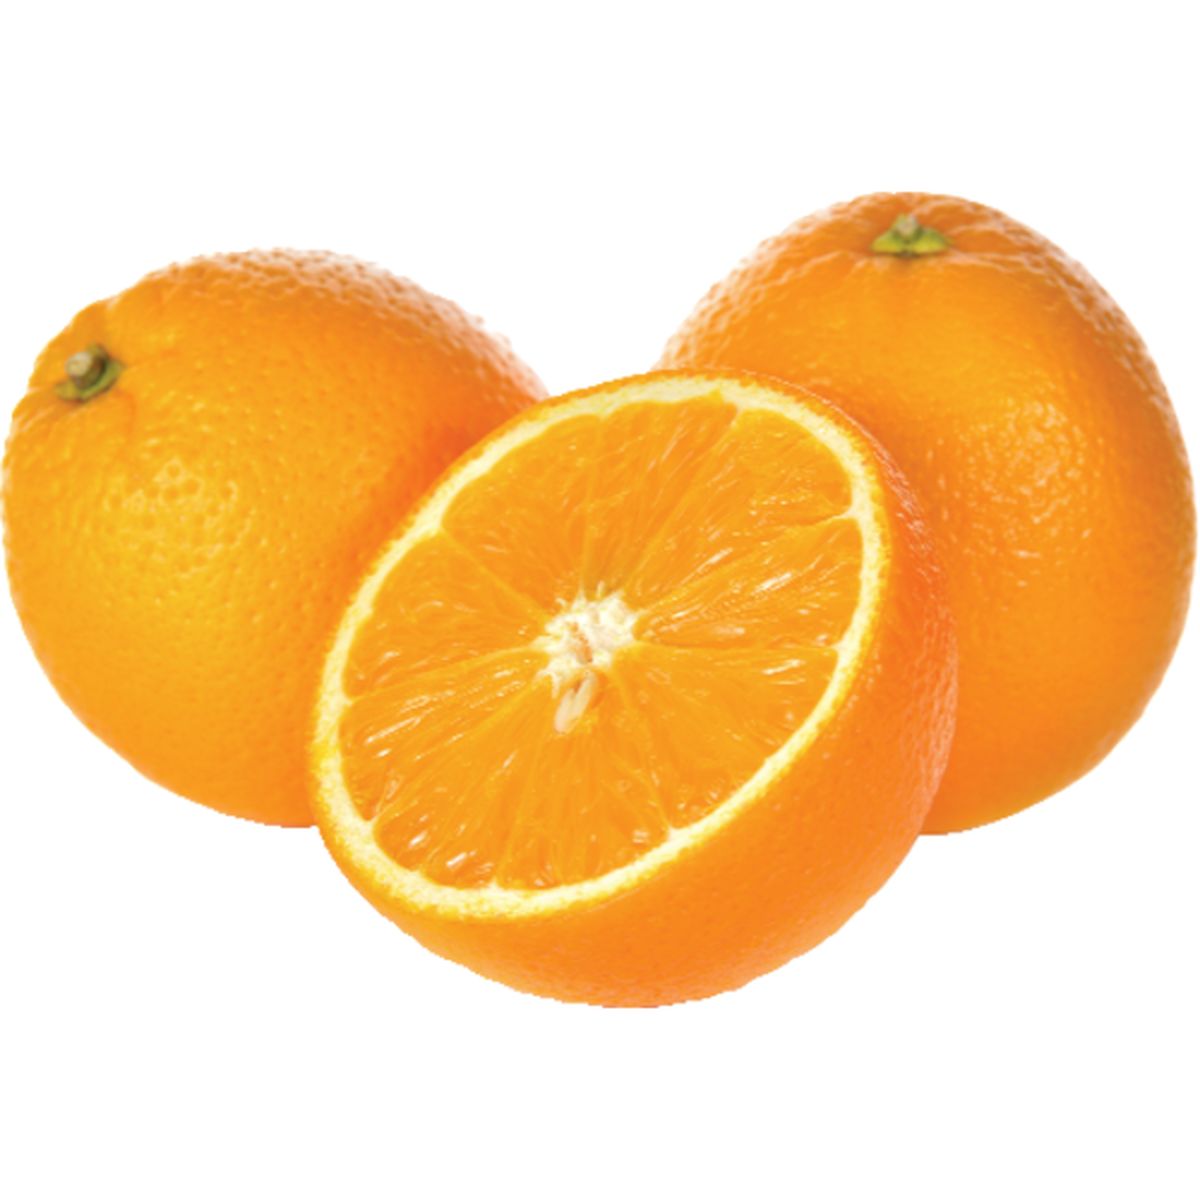 candied oranges